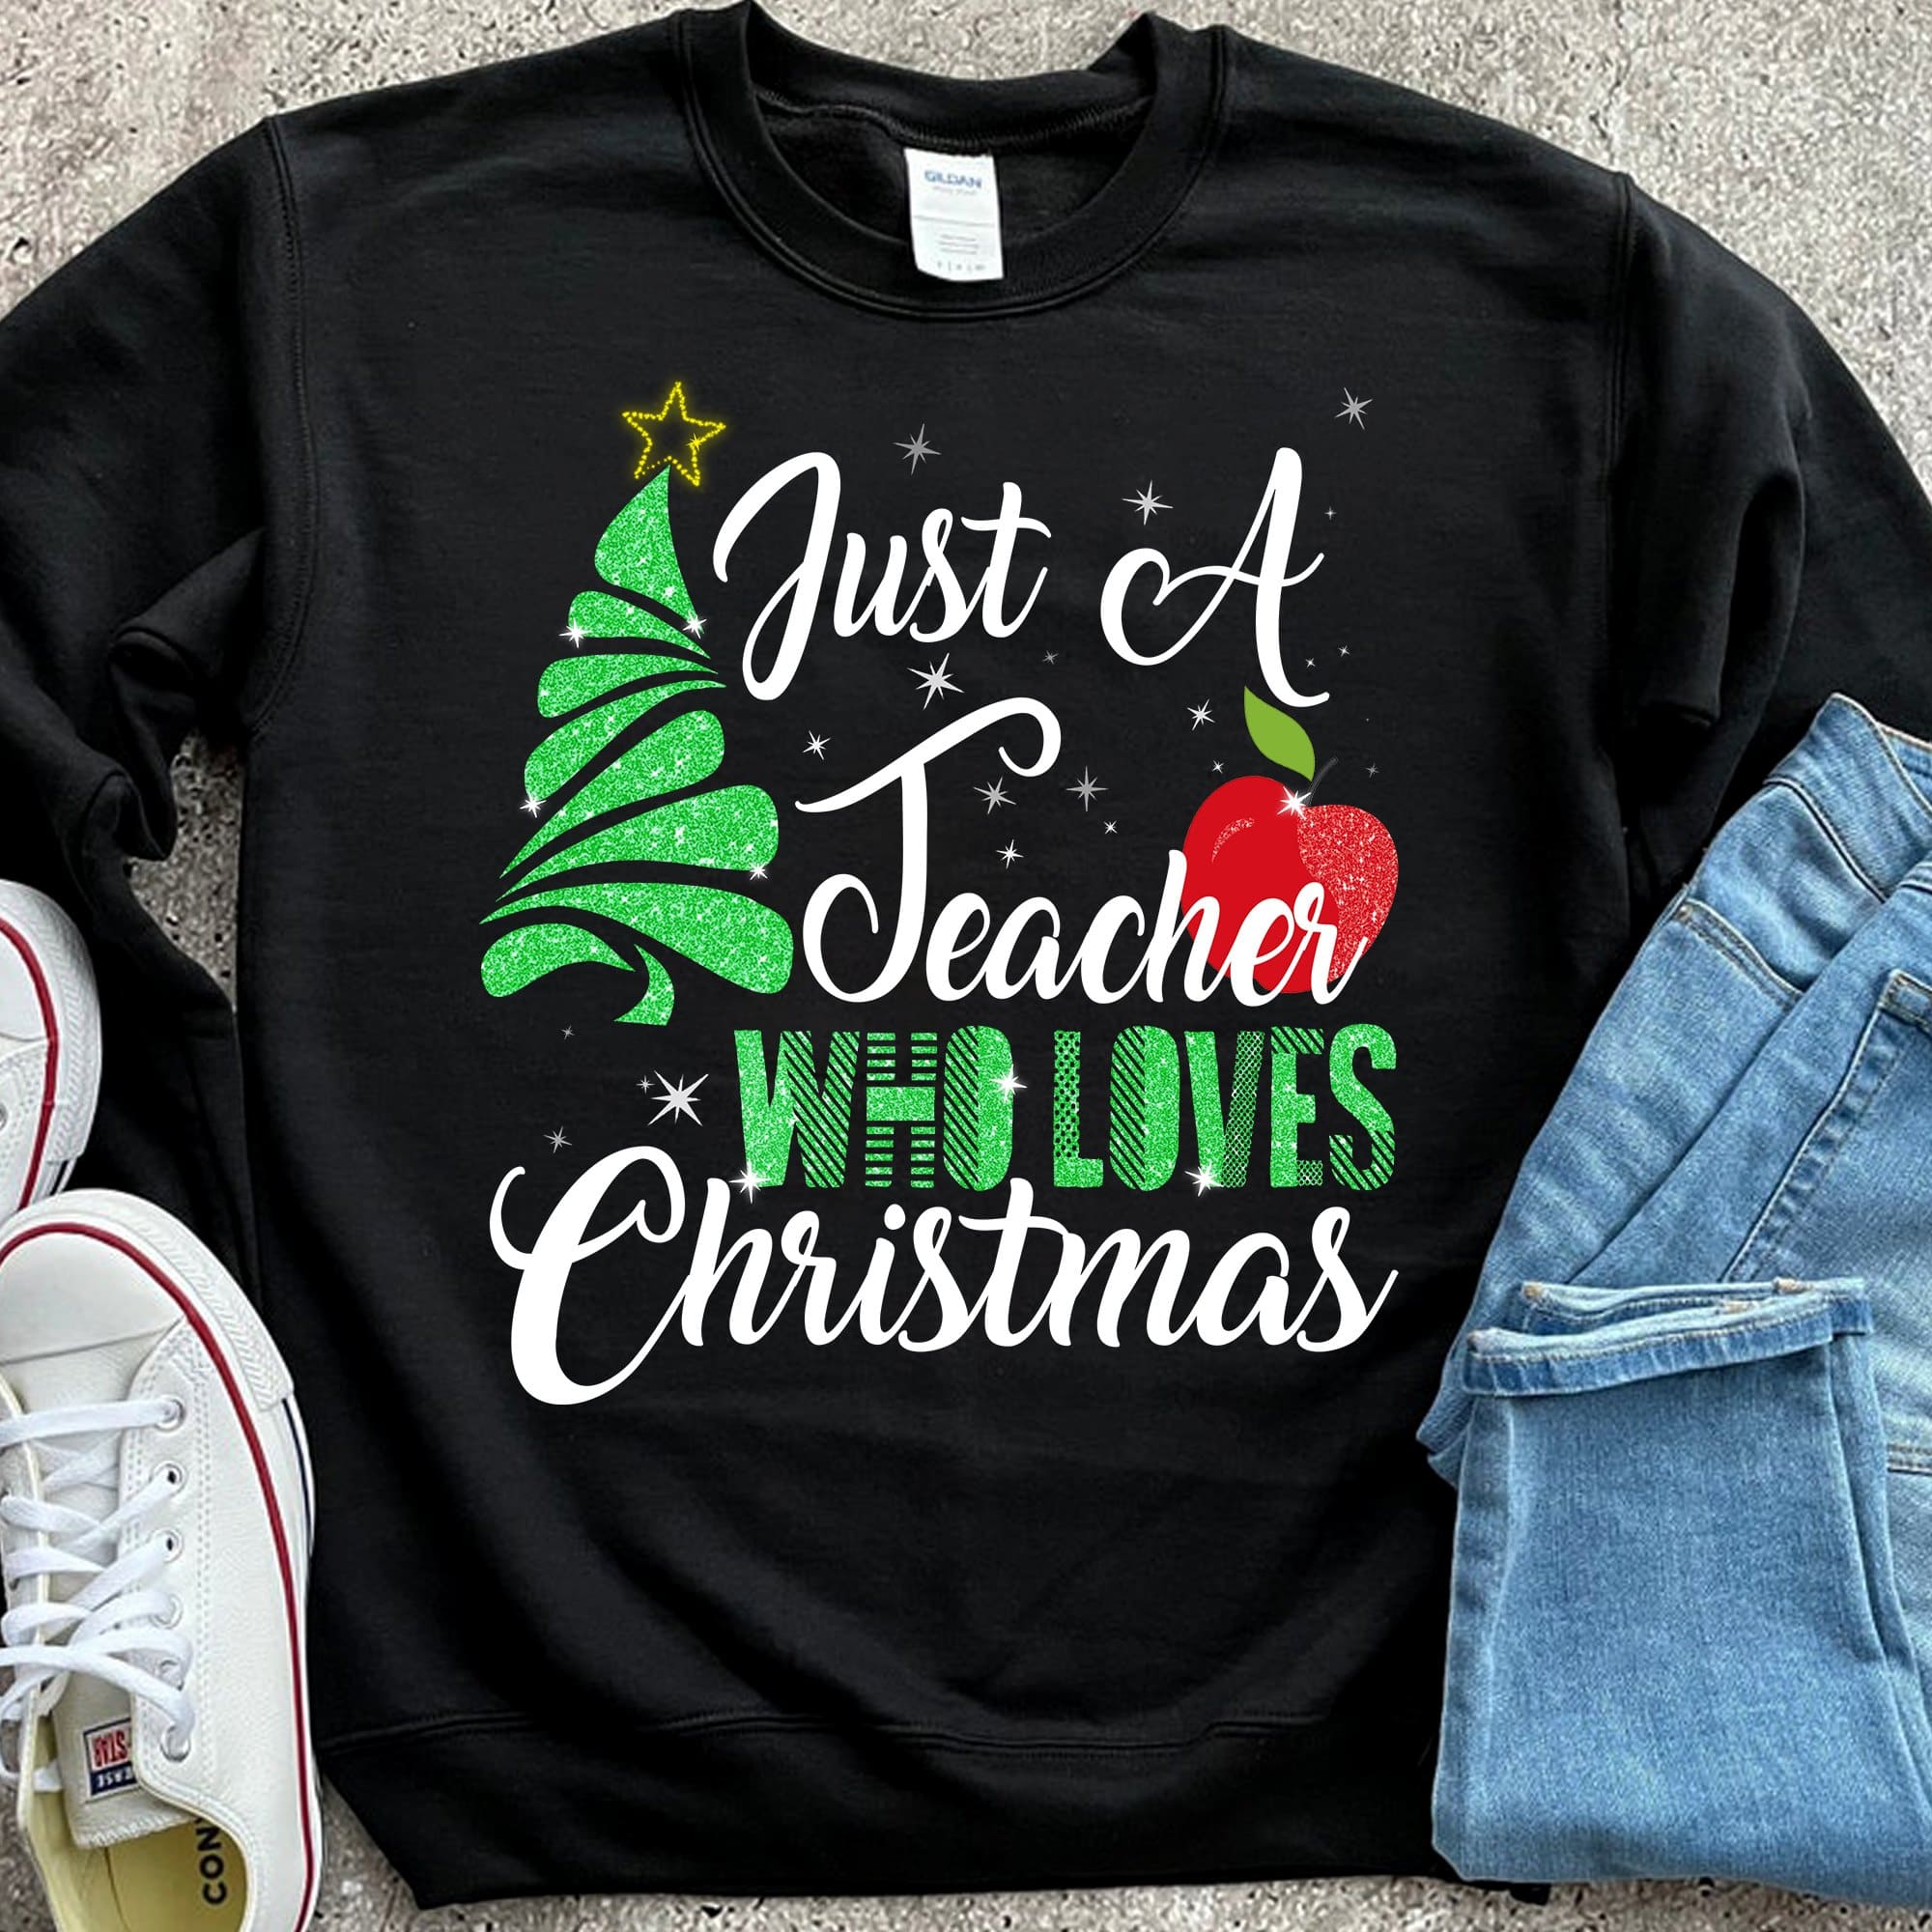 Just a teacher who loves Christmas - Christmas gift for teacher, Christmas ugly sweater